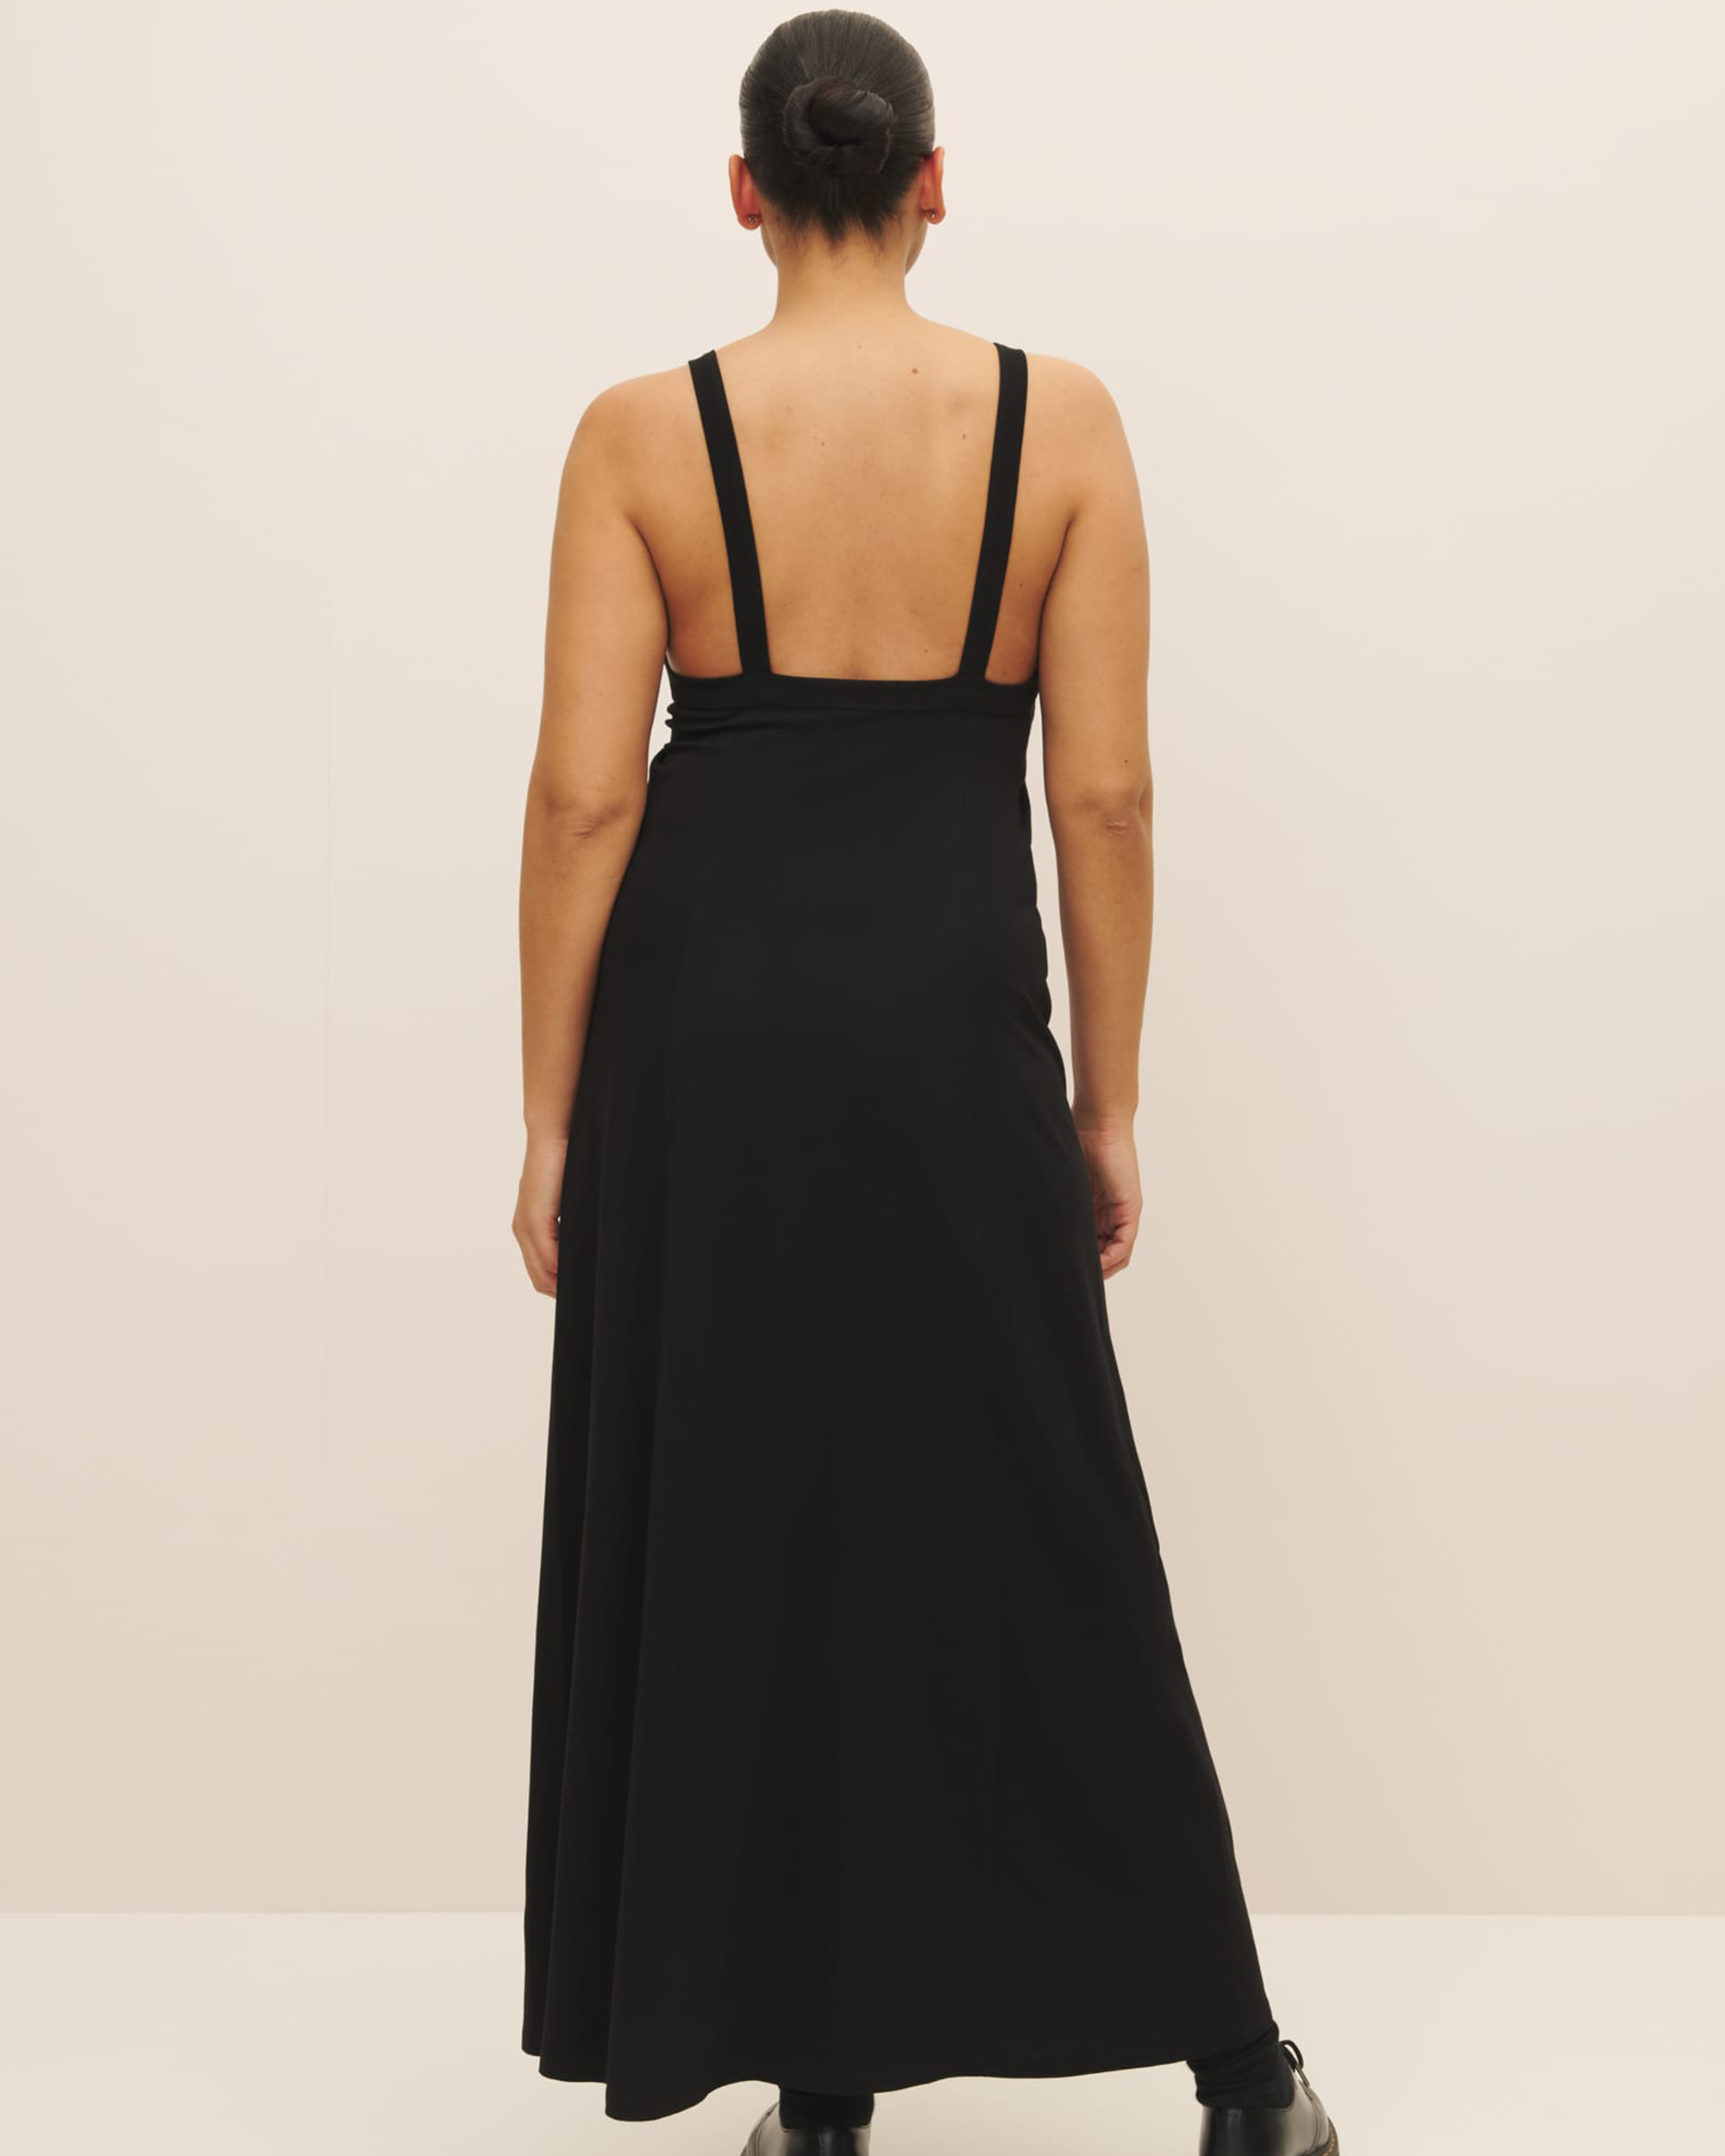 Low Back Dress - Black